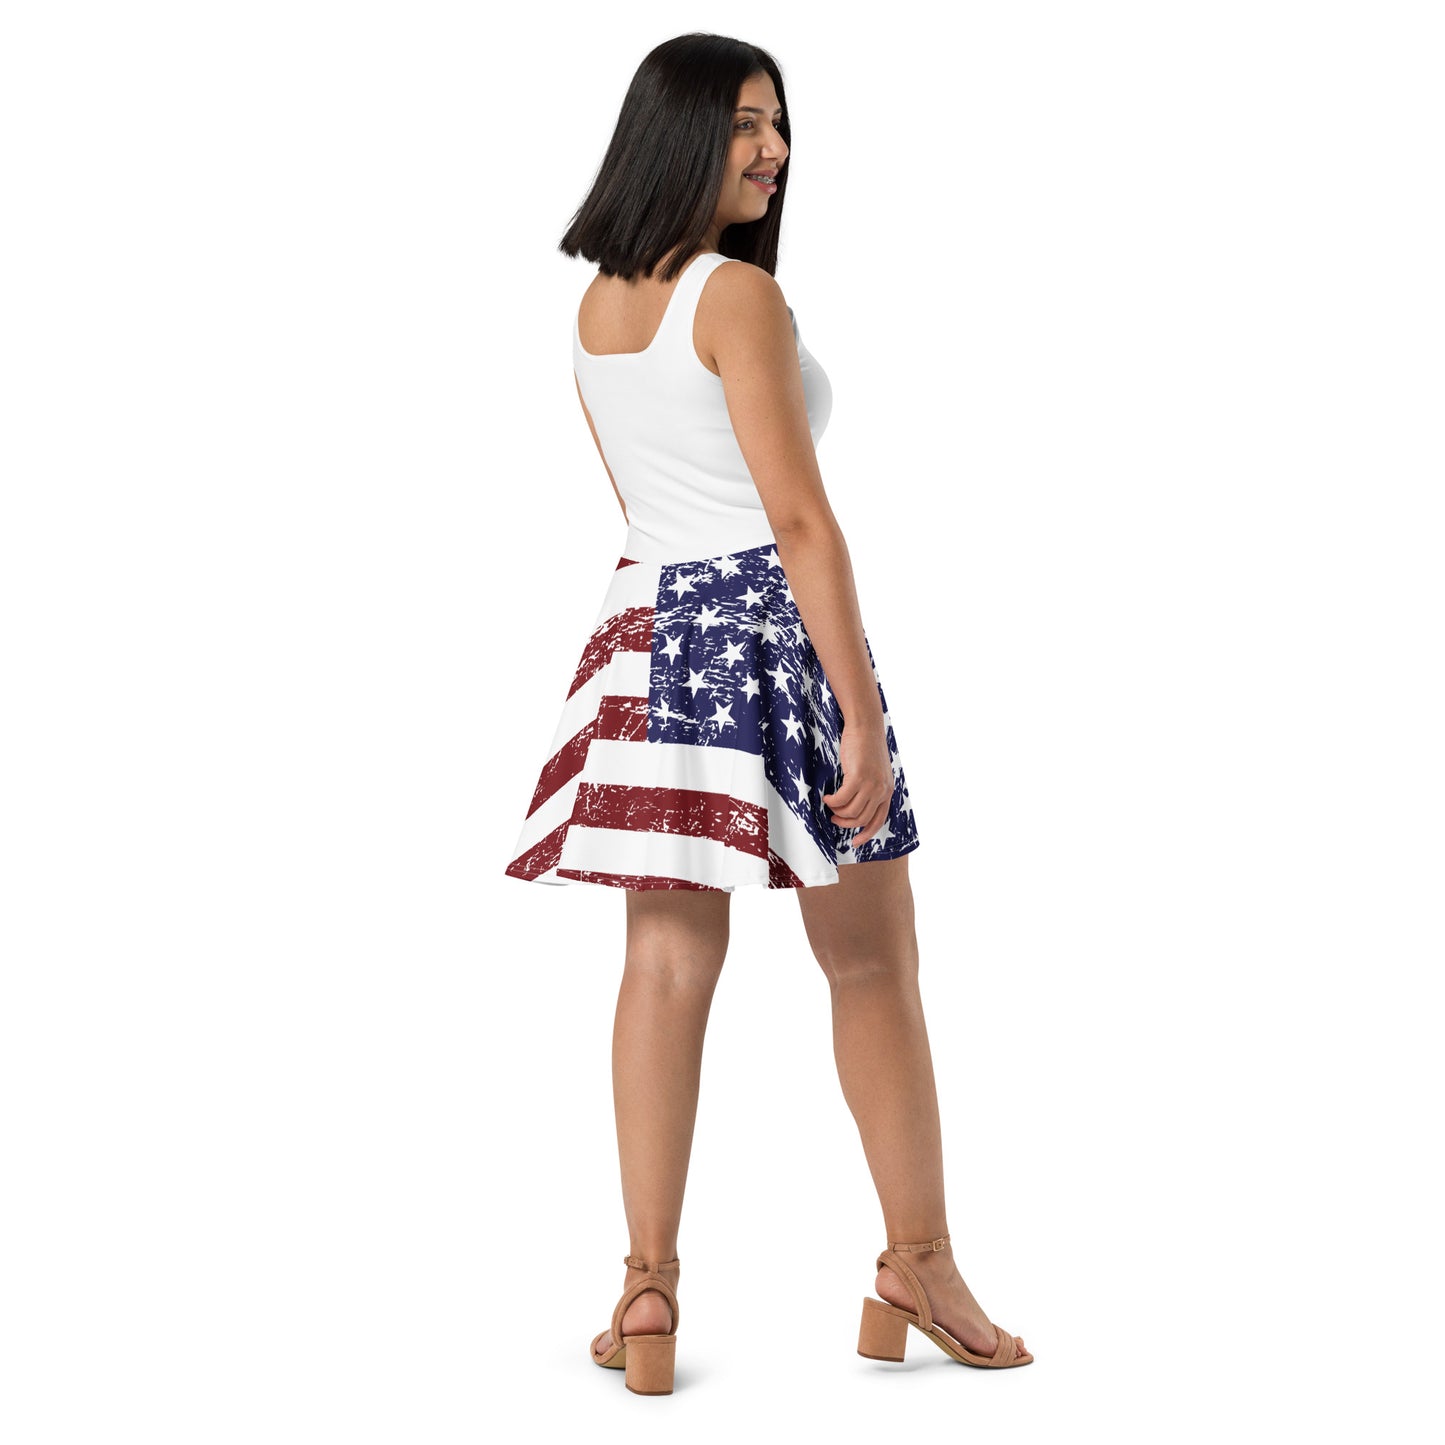 USA Flag Skater Dress w/ White Top